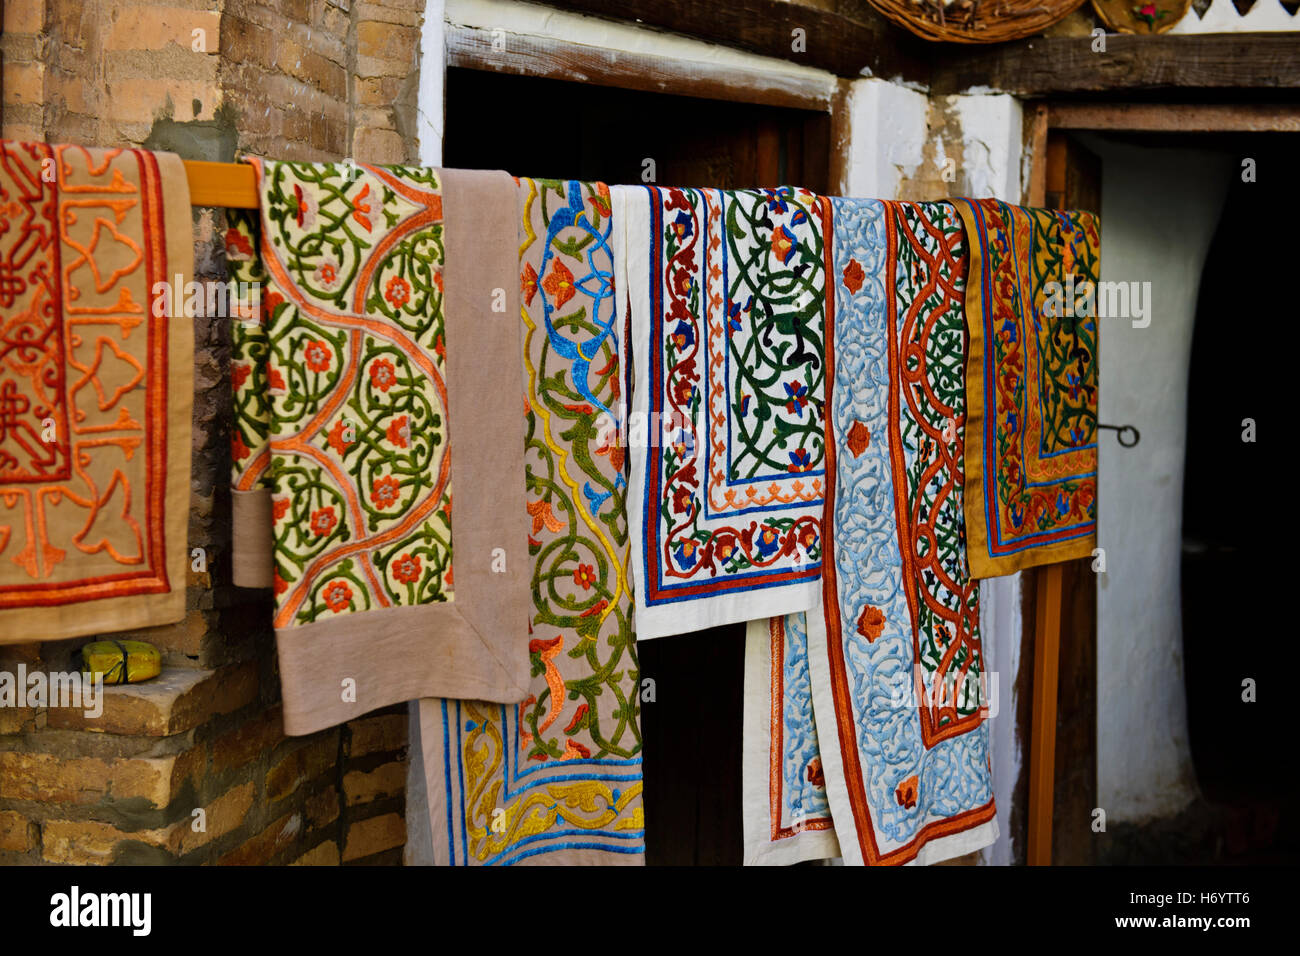 Khiva Silk Workshops,colorful, Suzanas,throws,bed spreads,silk carpets,women at work,Silk Road,Khorezm Province,Uzbekistan Stock Photo